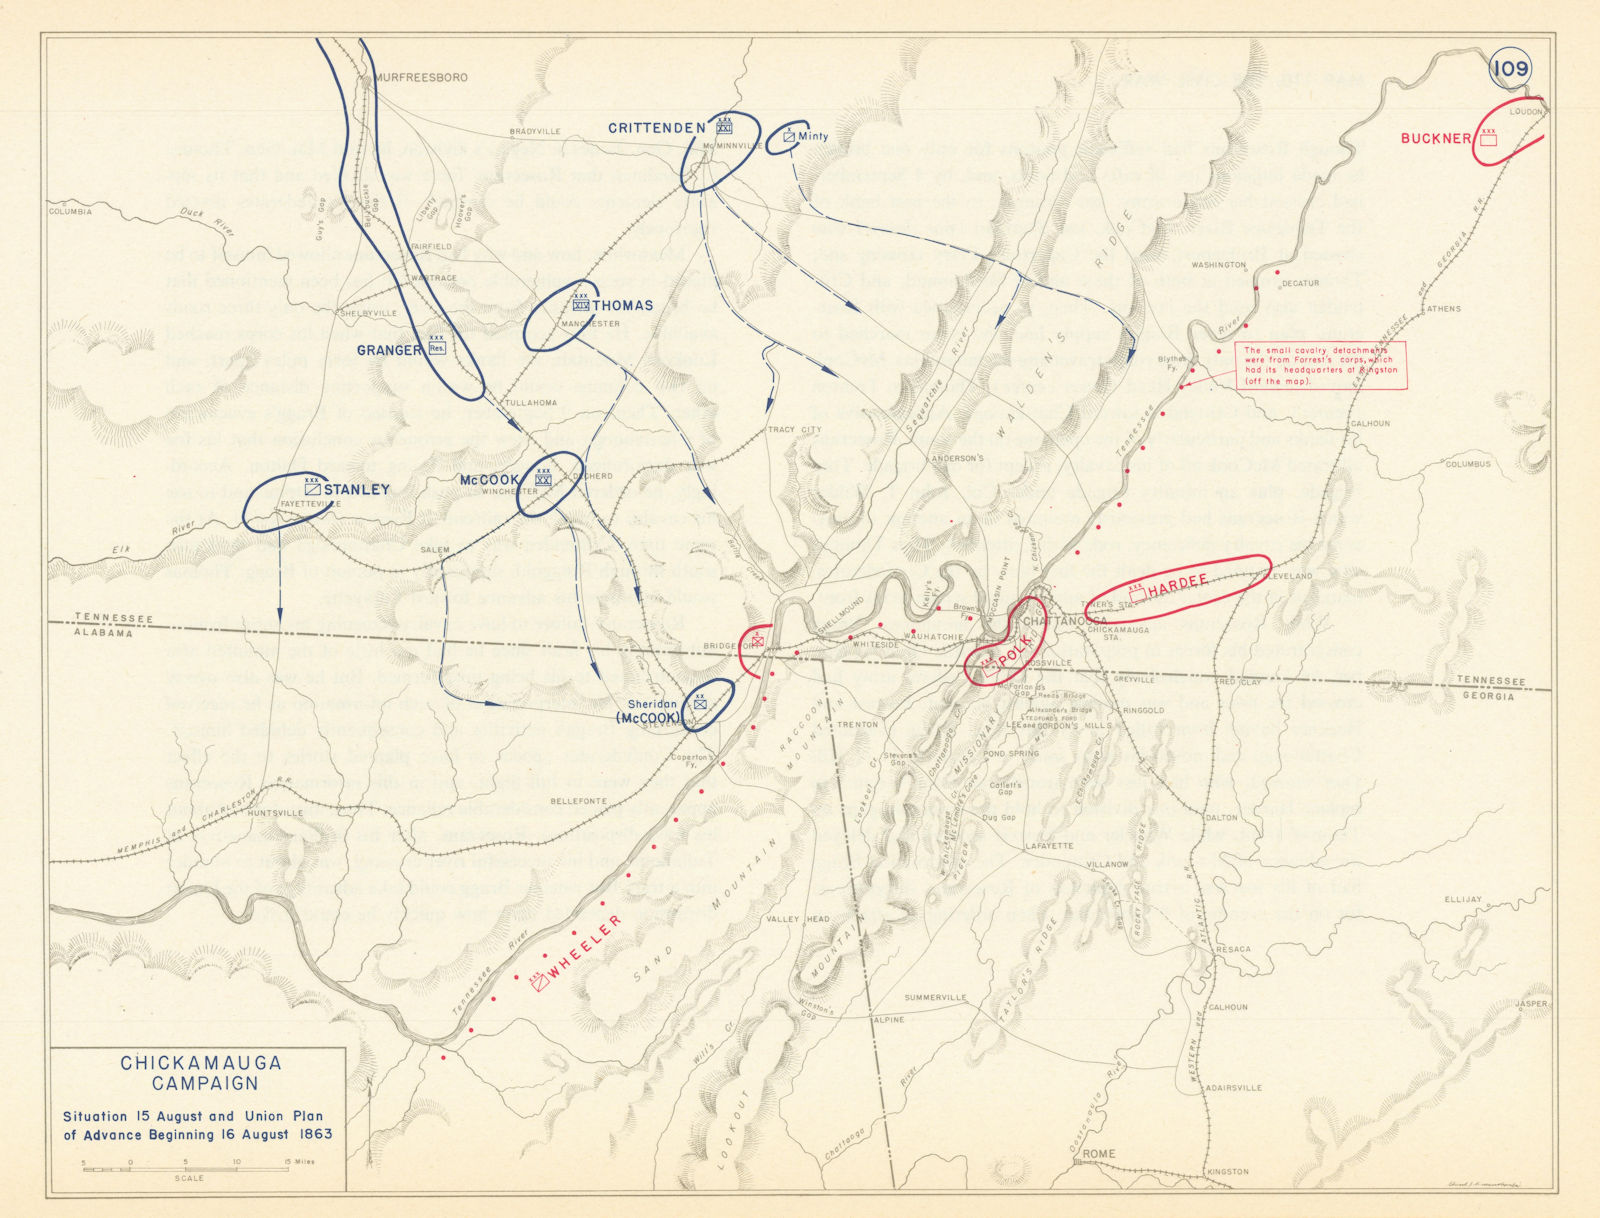 American Civil War. 15-16 August 1863 Chickamauga Campaign. Union Plan 1959 map